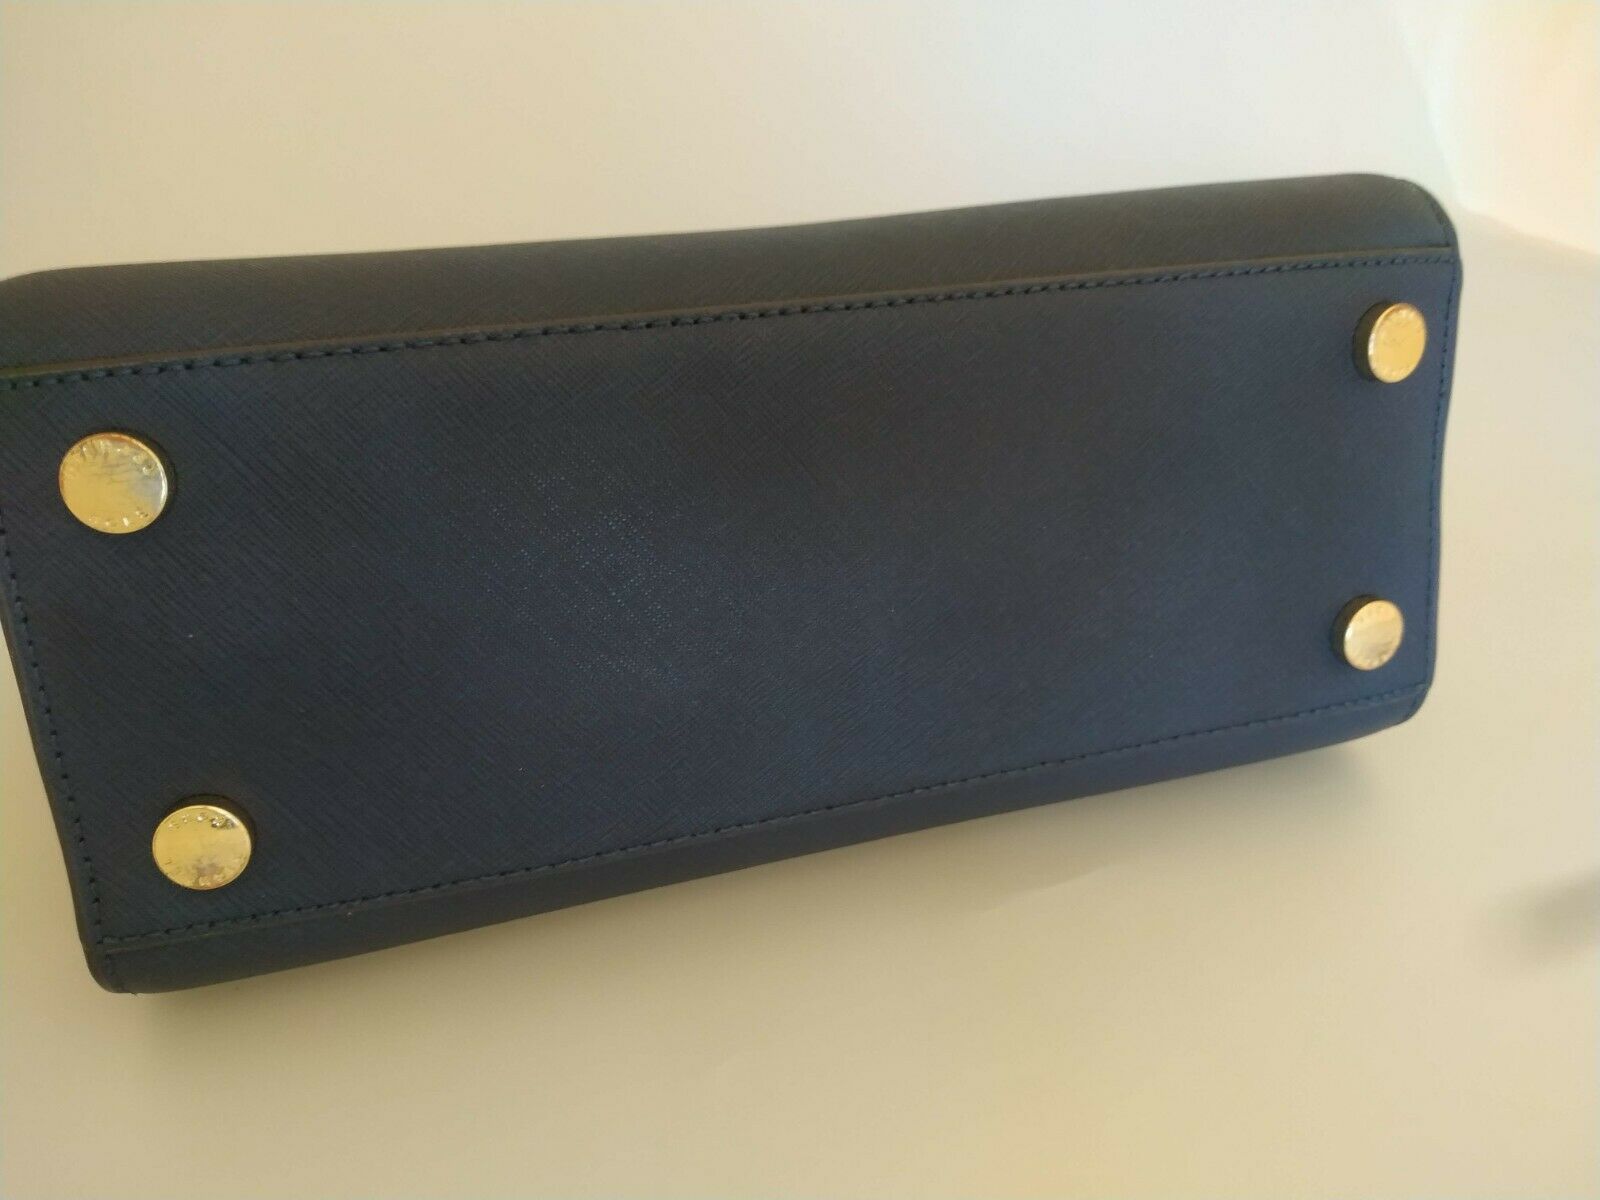 MK Michael Kors Selma Navy Saffiano Leather Bag & Wallet Set